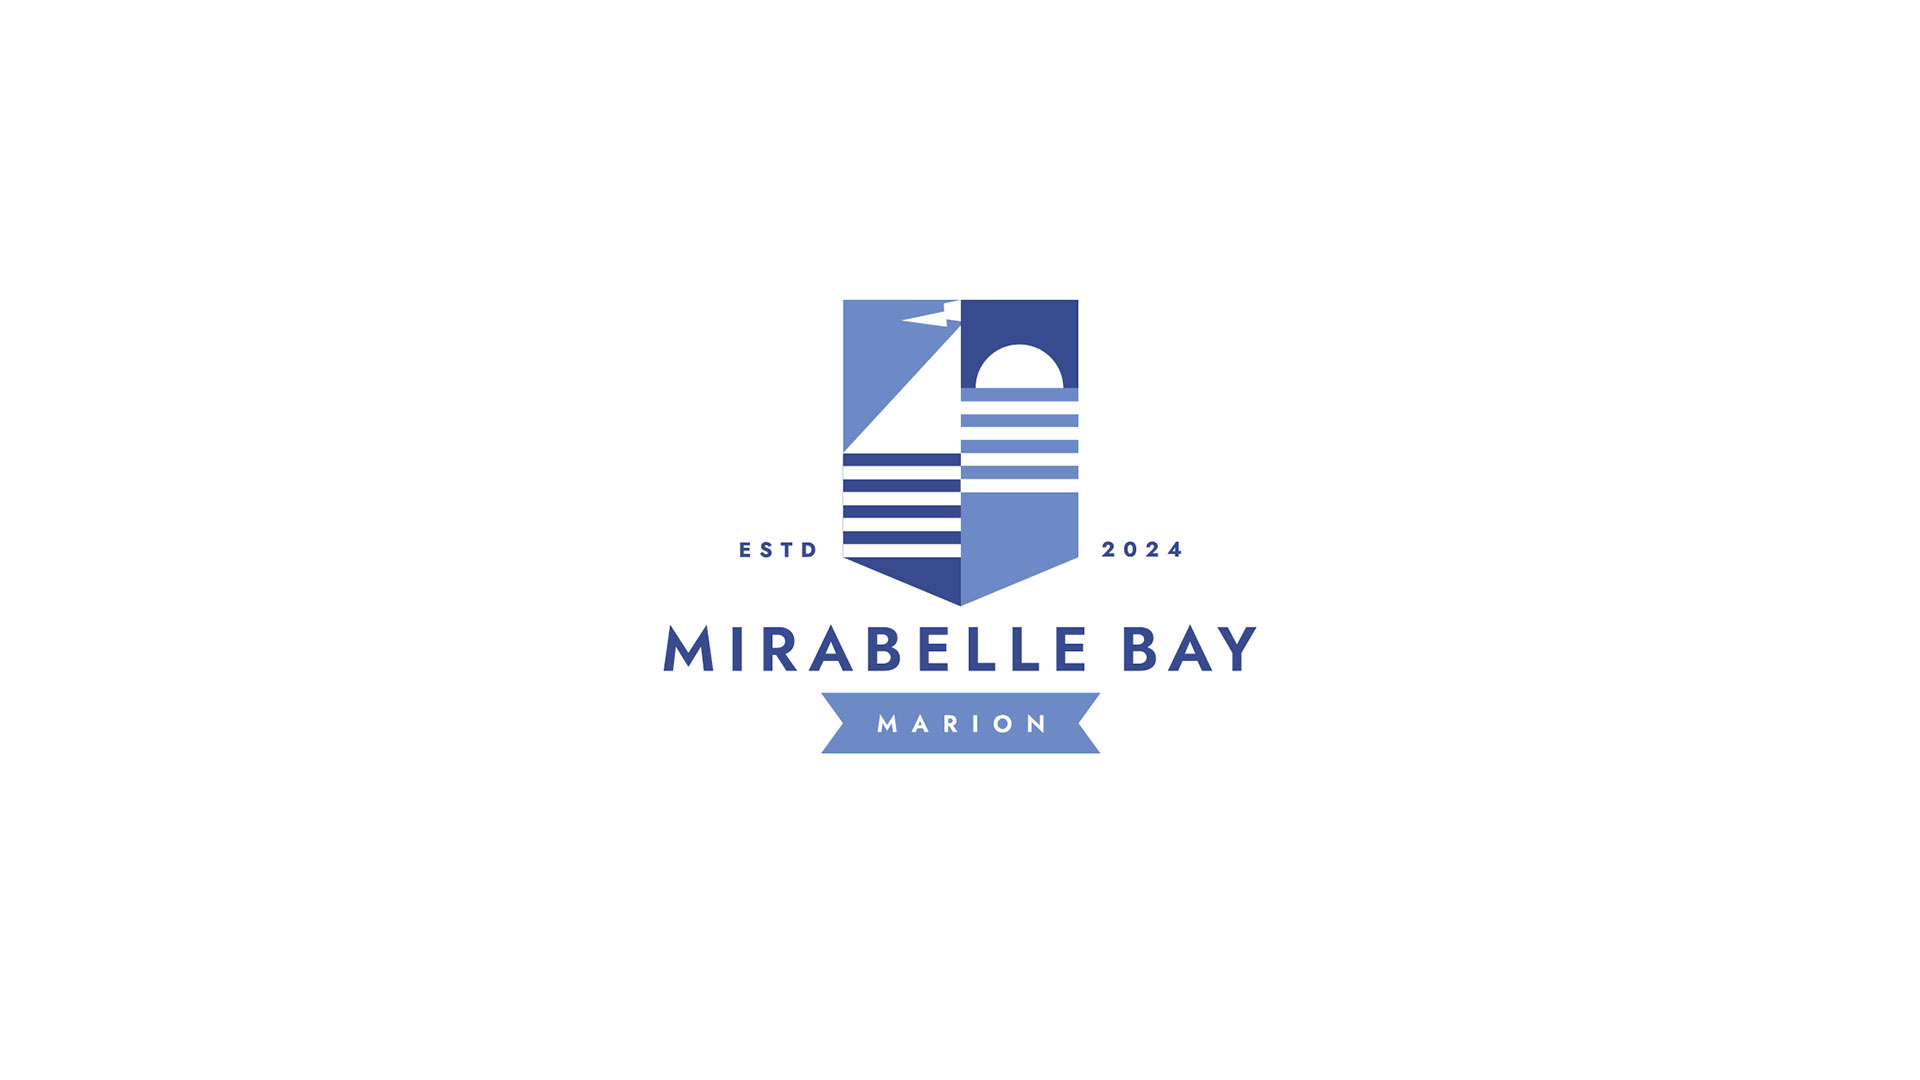 Mirabelle Bay